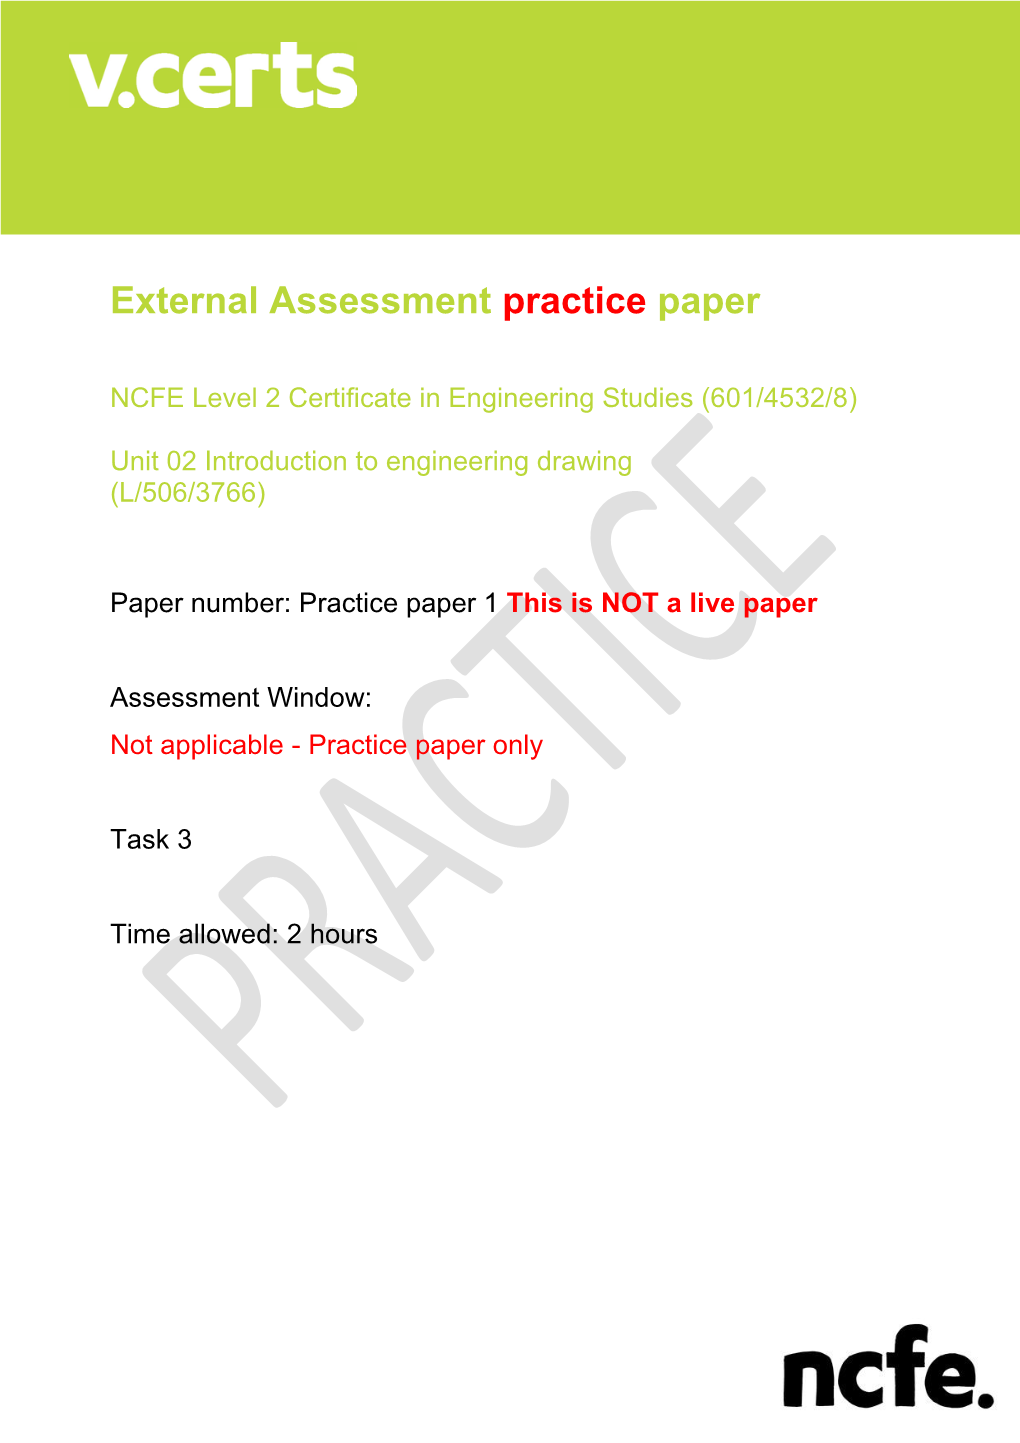 External Assessment Practice Paper